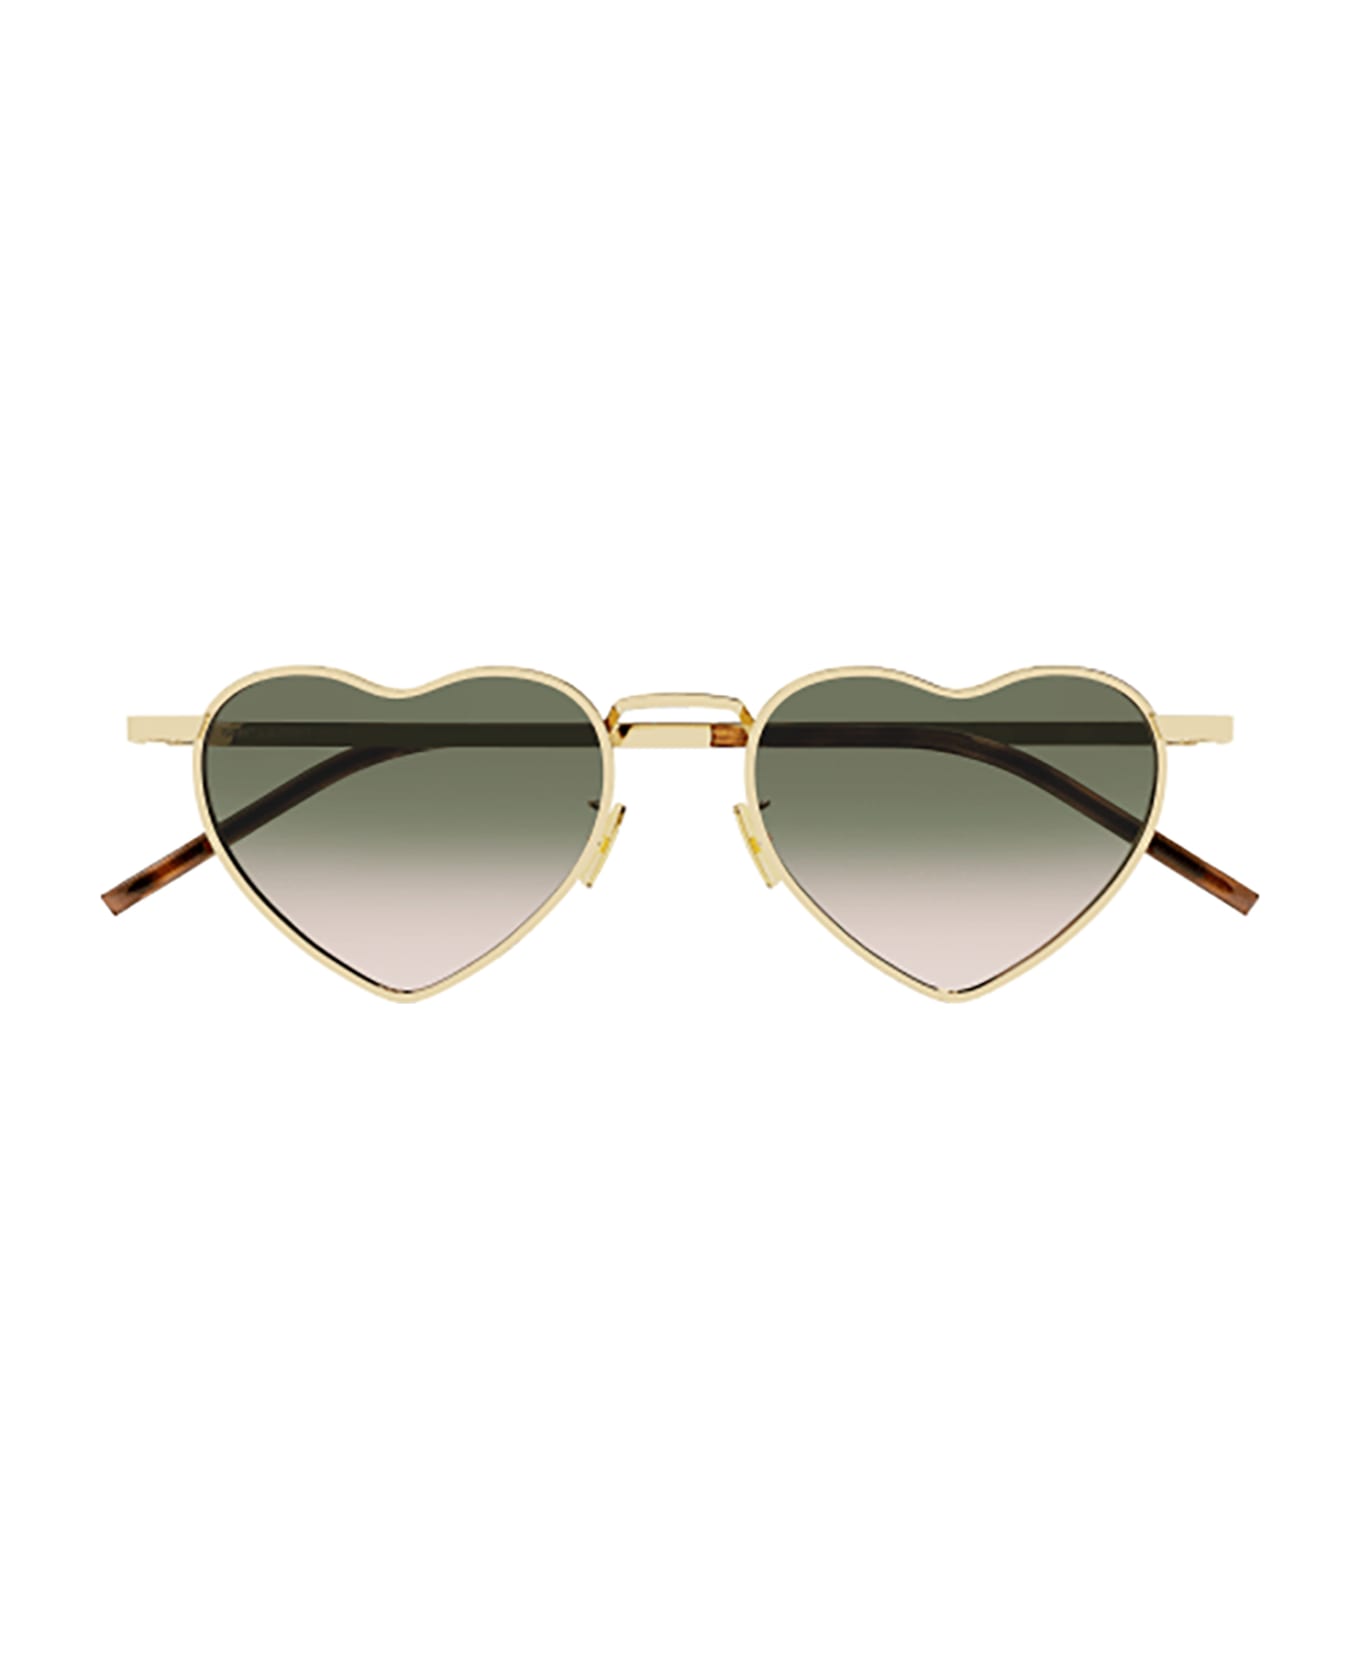 Saint Laurent Eyewear SL 301 LOULOU Sunglasses - Gold Gold Green